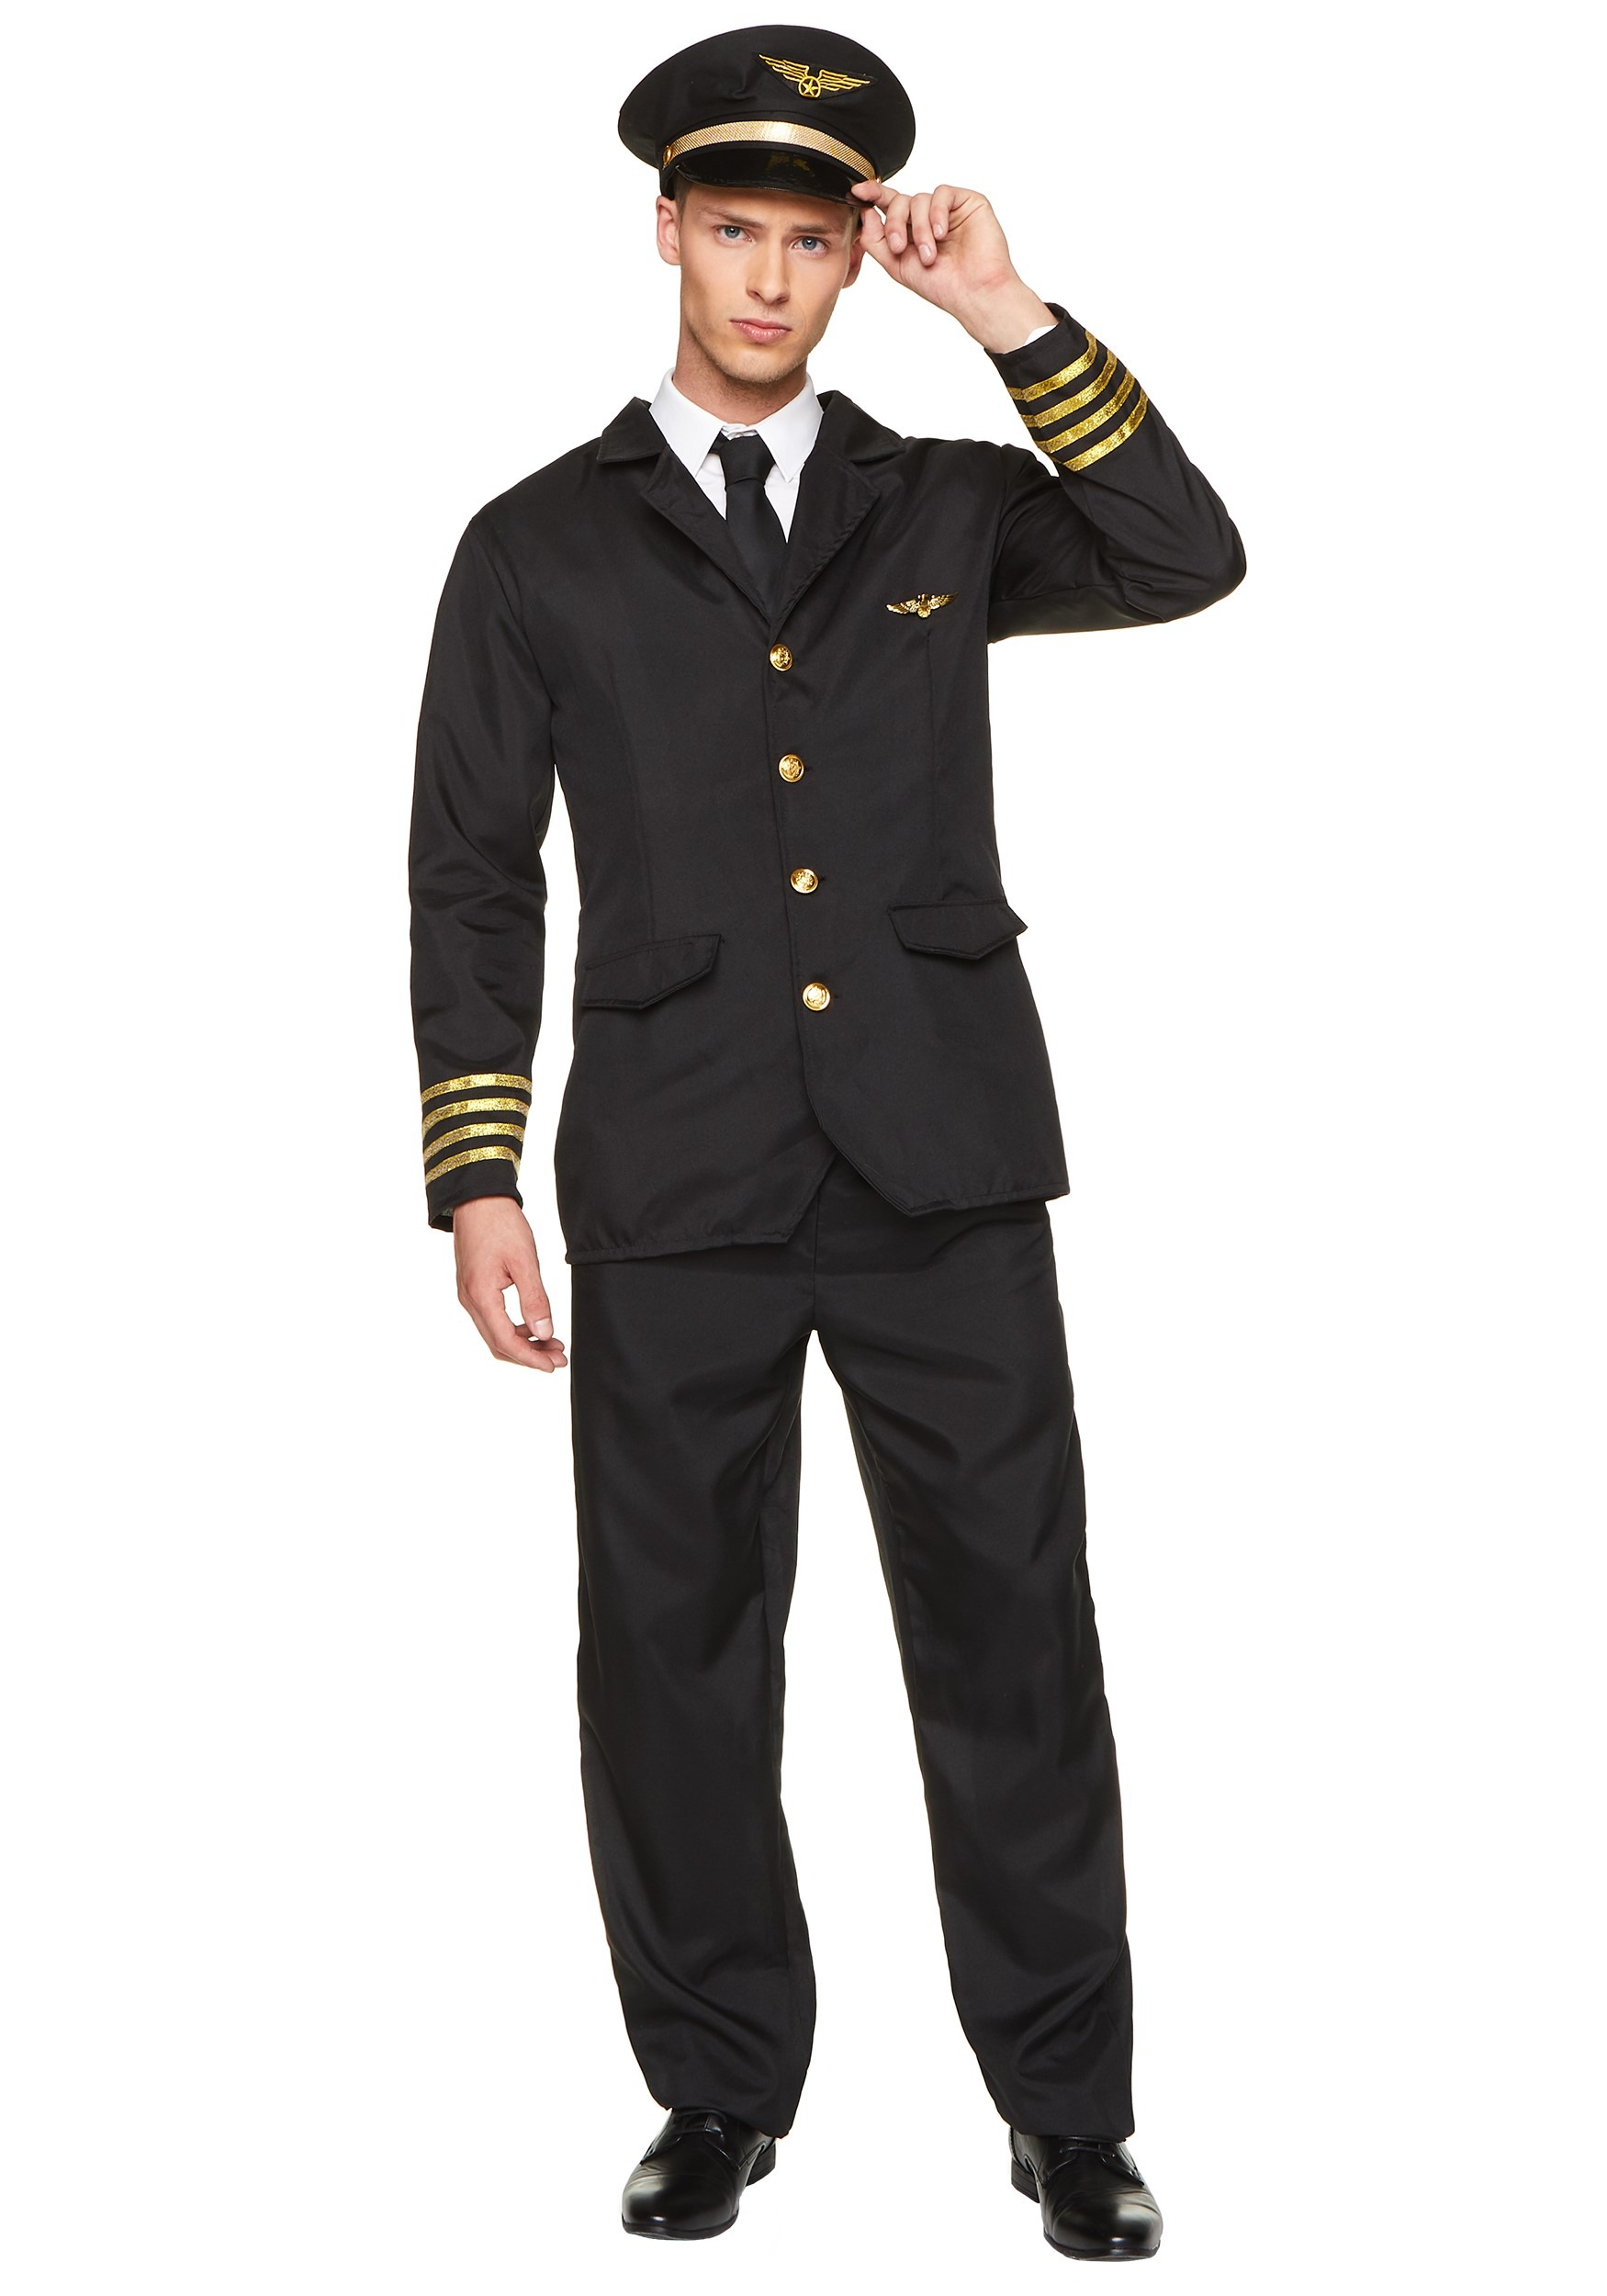 Airline Pilot Costume Men’s Large Shirt Tie New Dress Up 